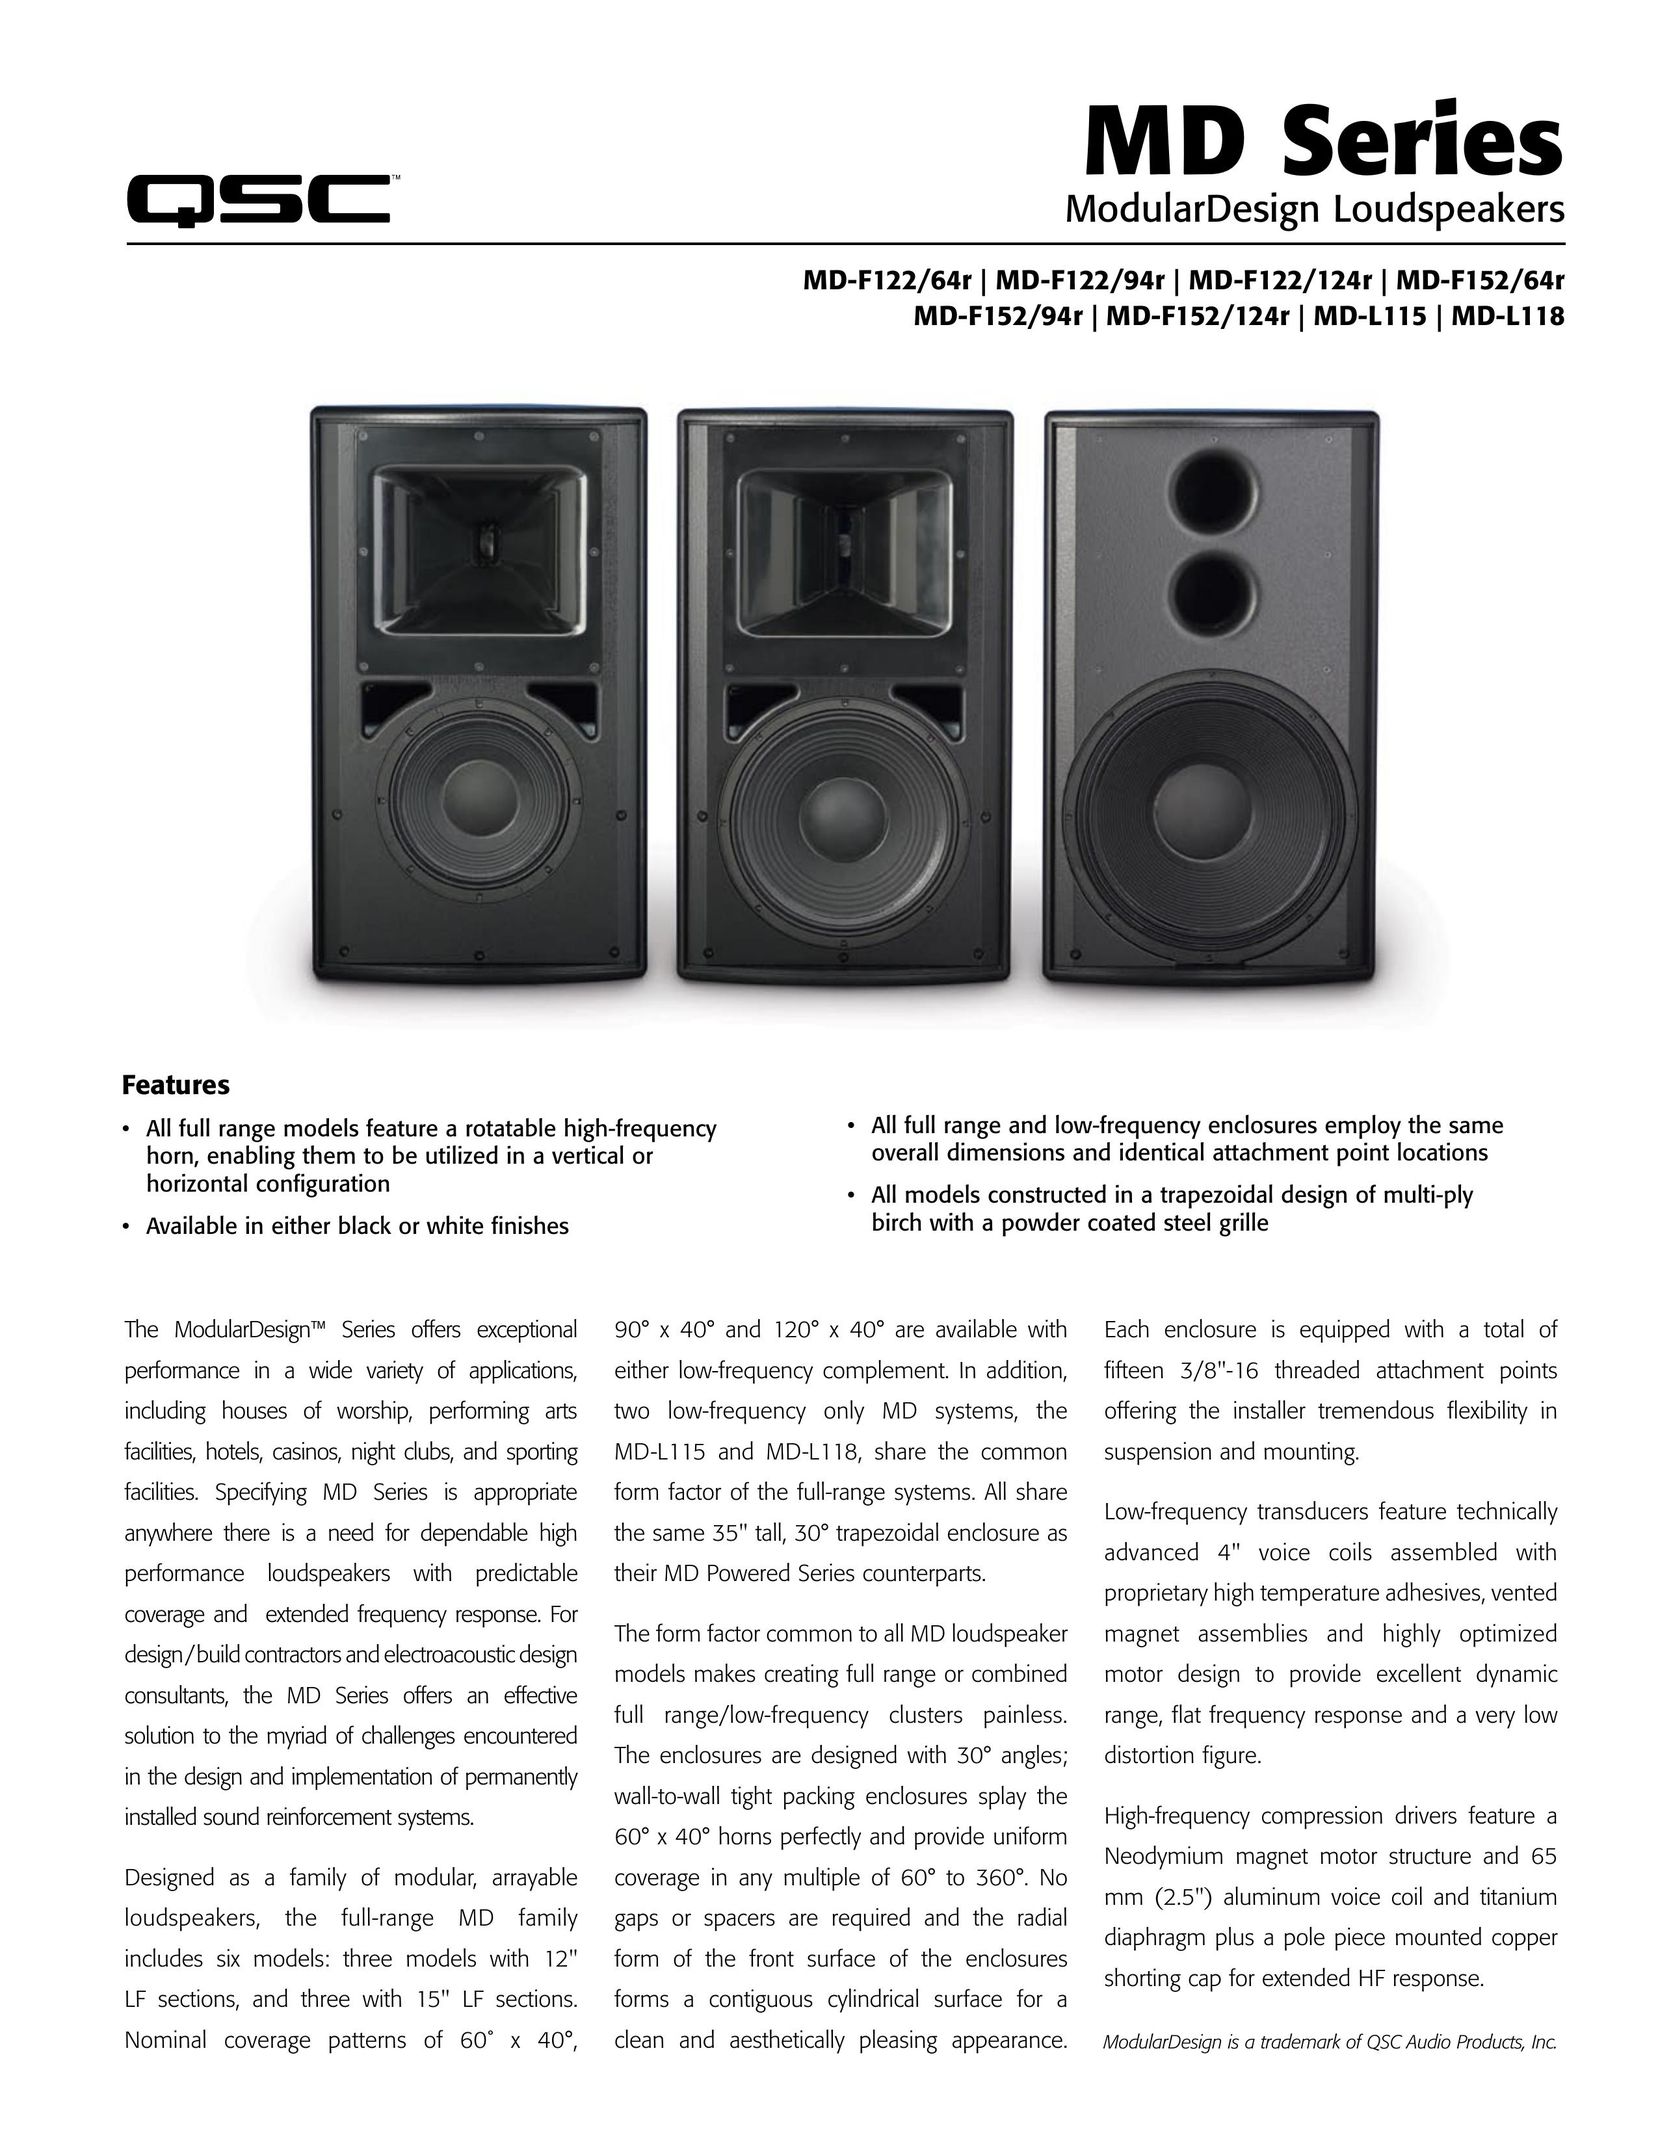 QSC Audio MD-F122/124r Portable Speaker User Manual